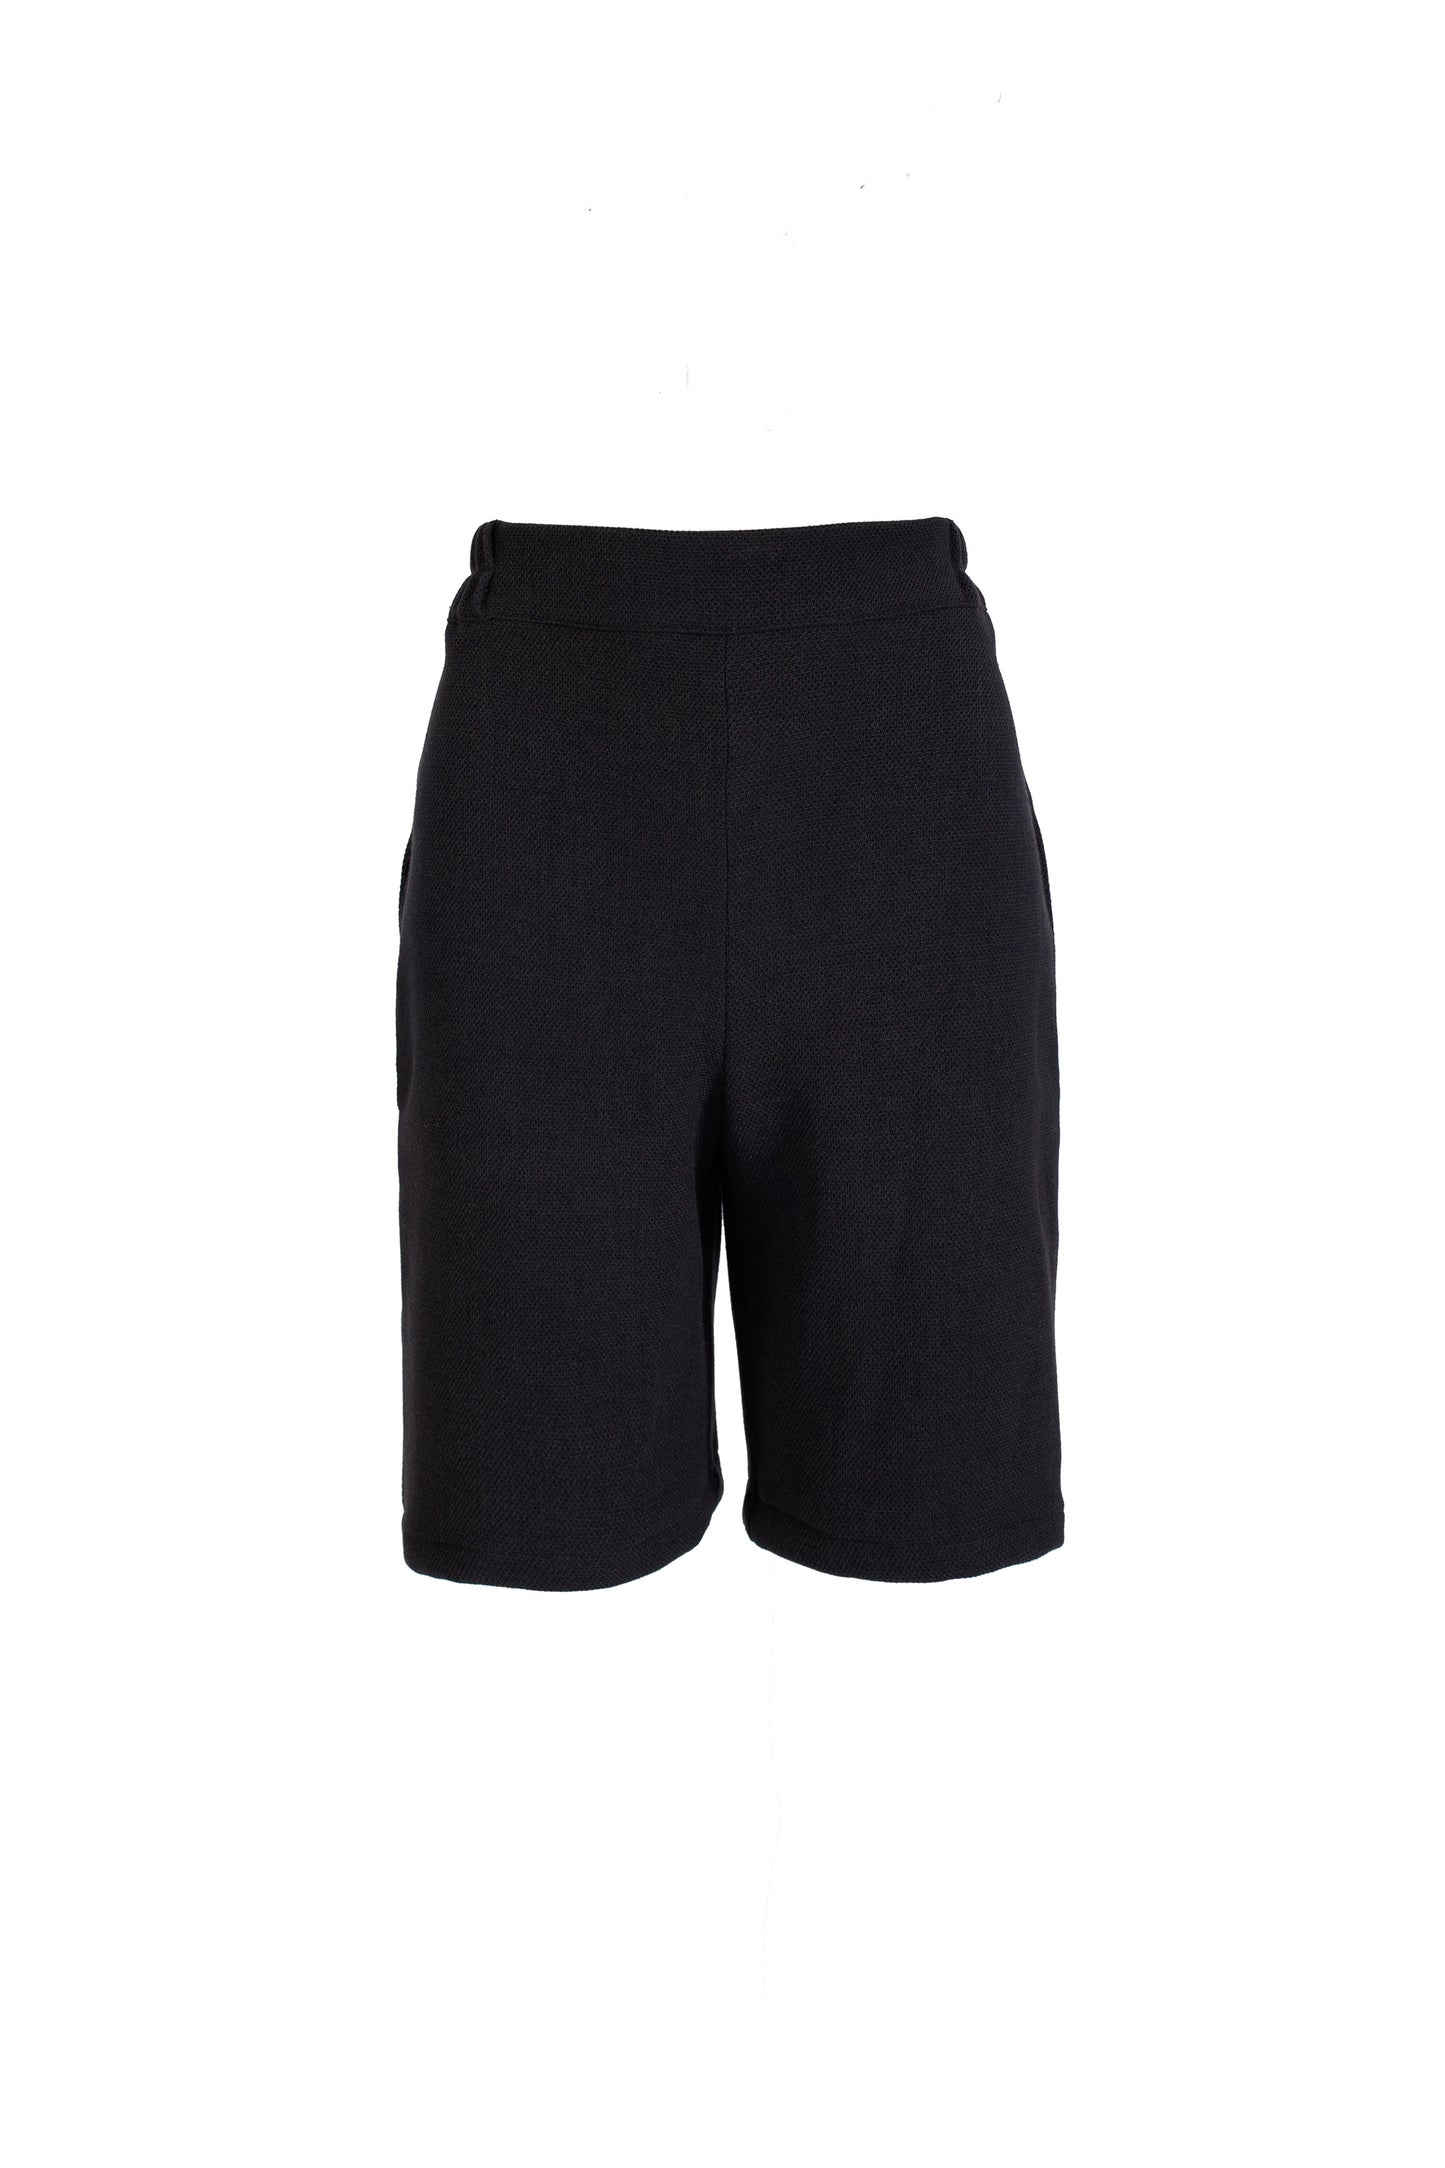 Guérison | shorts noirs